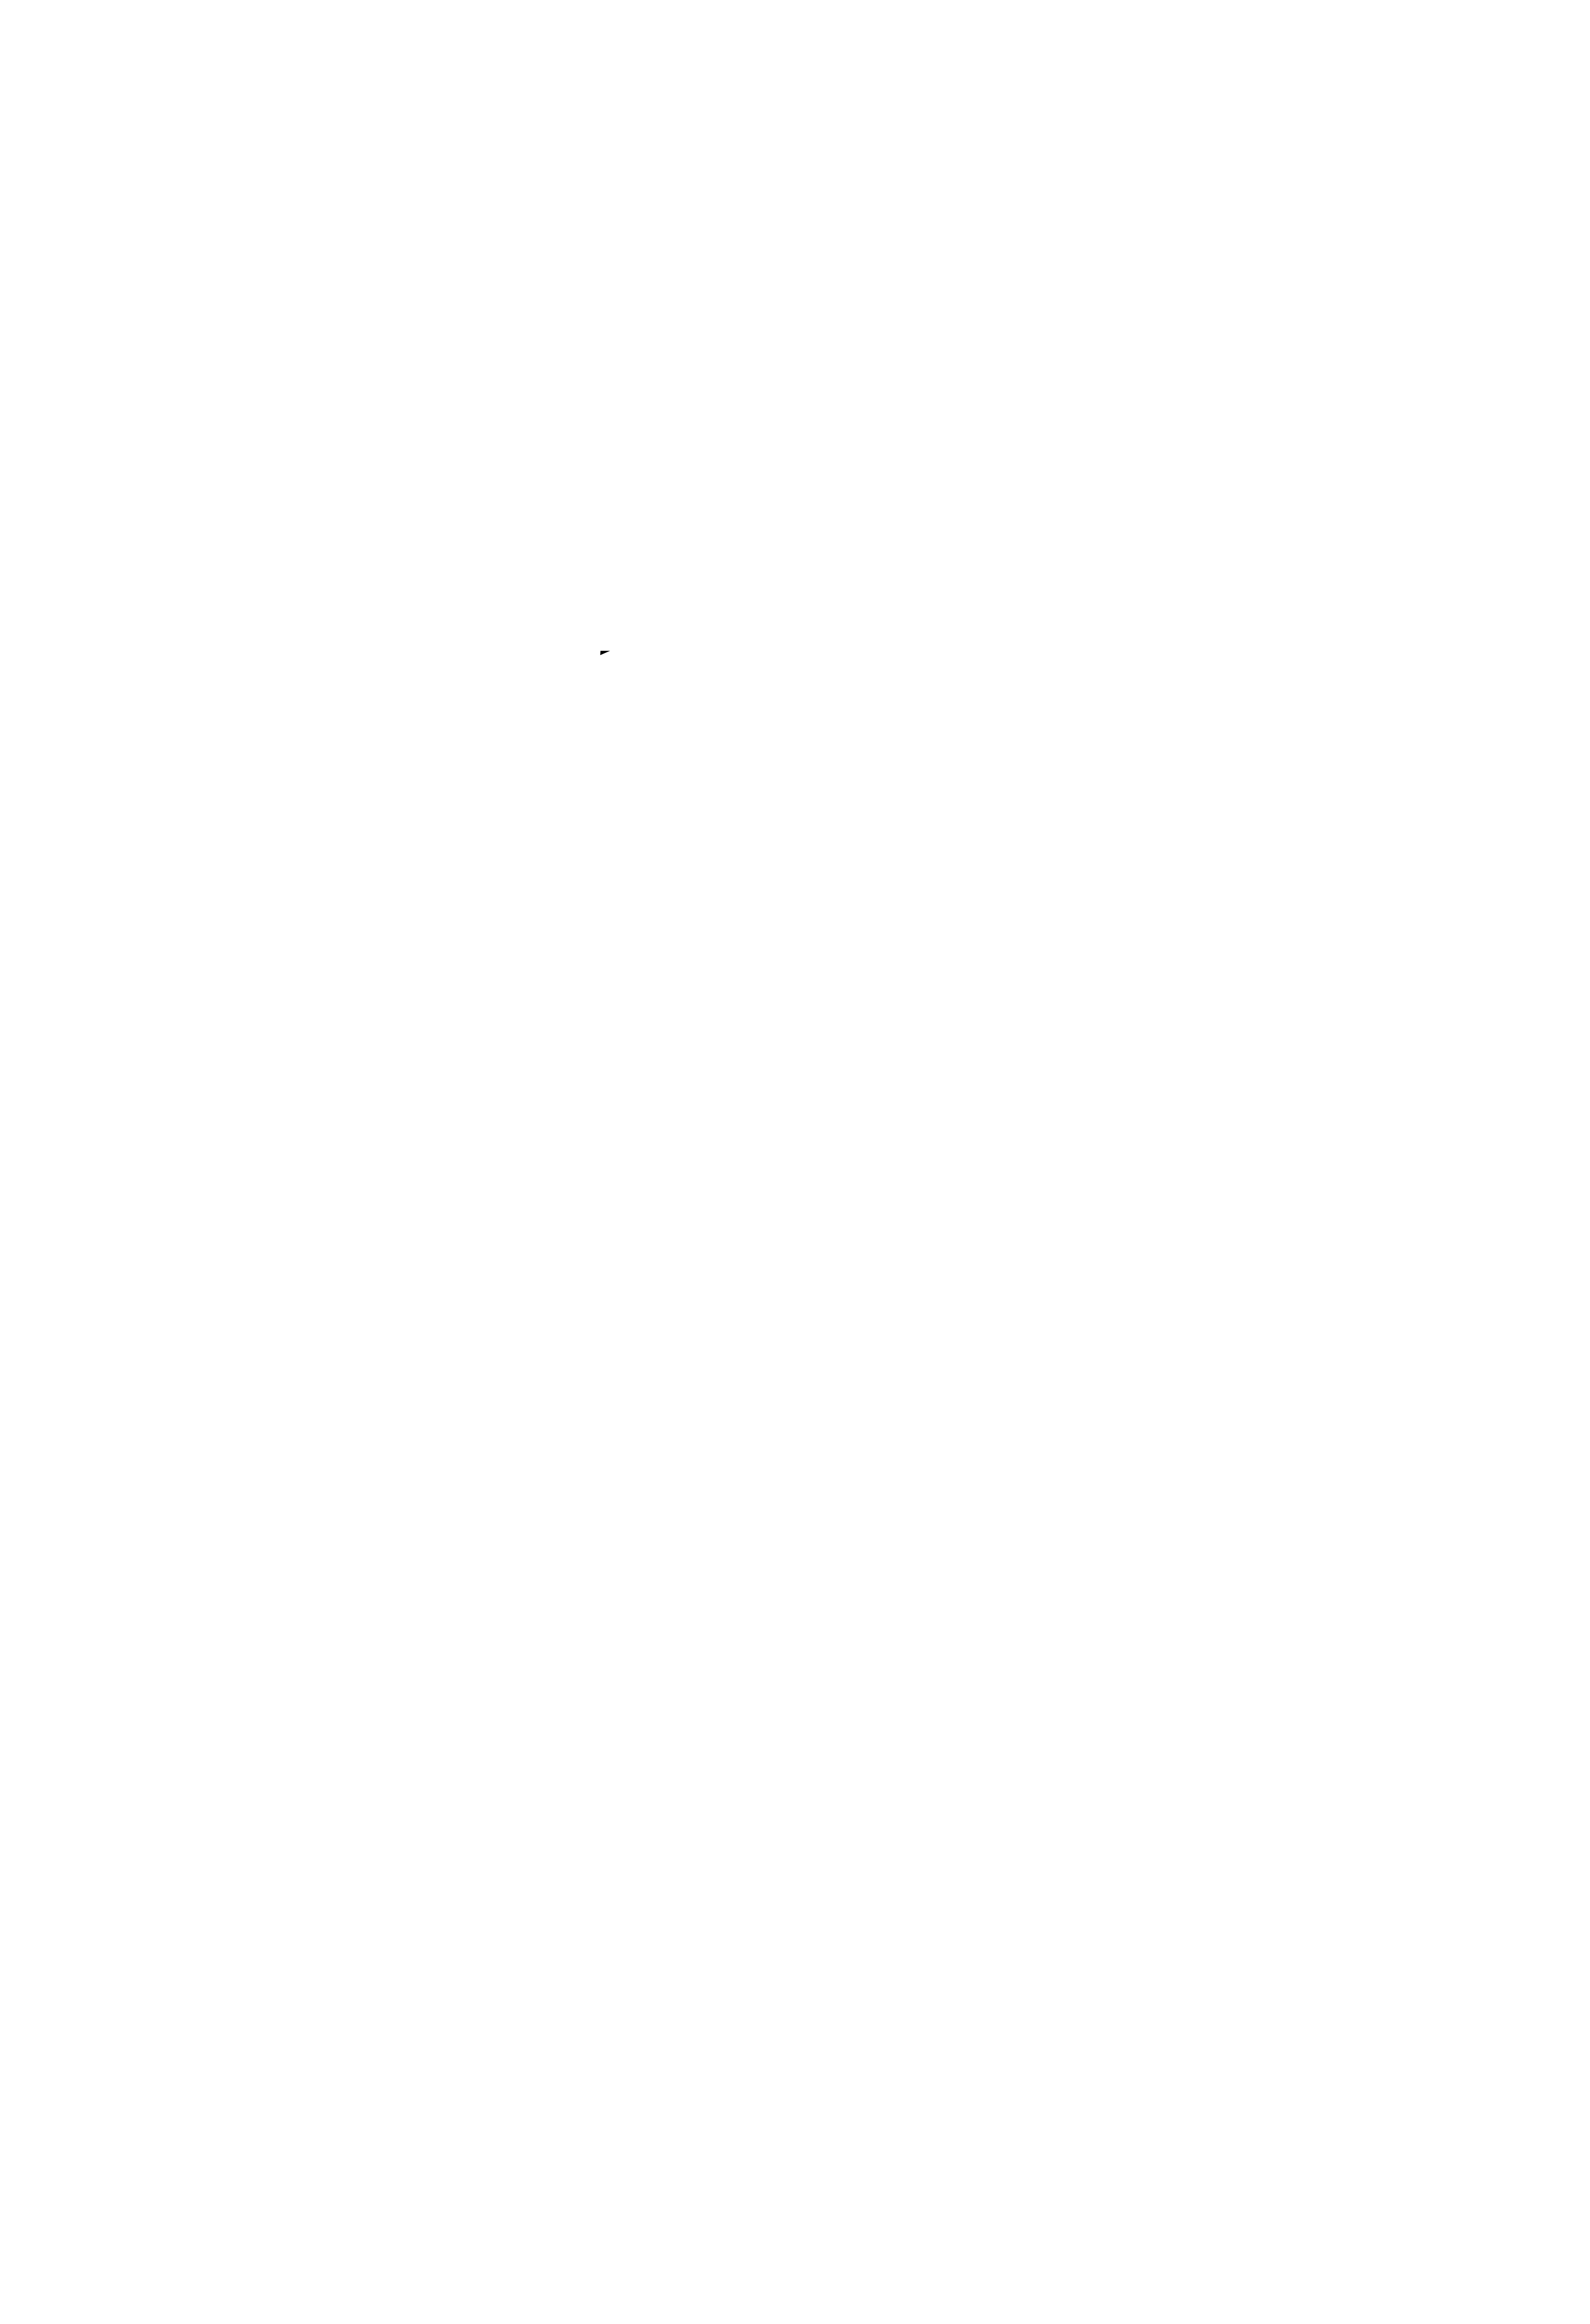 City of Minneapolis 150th Celebration (4970)